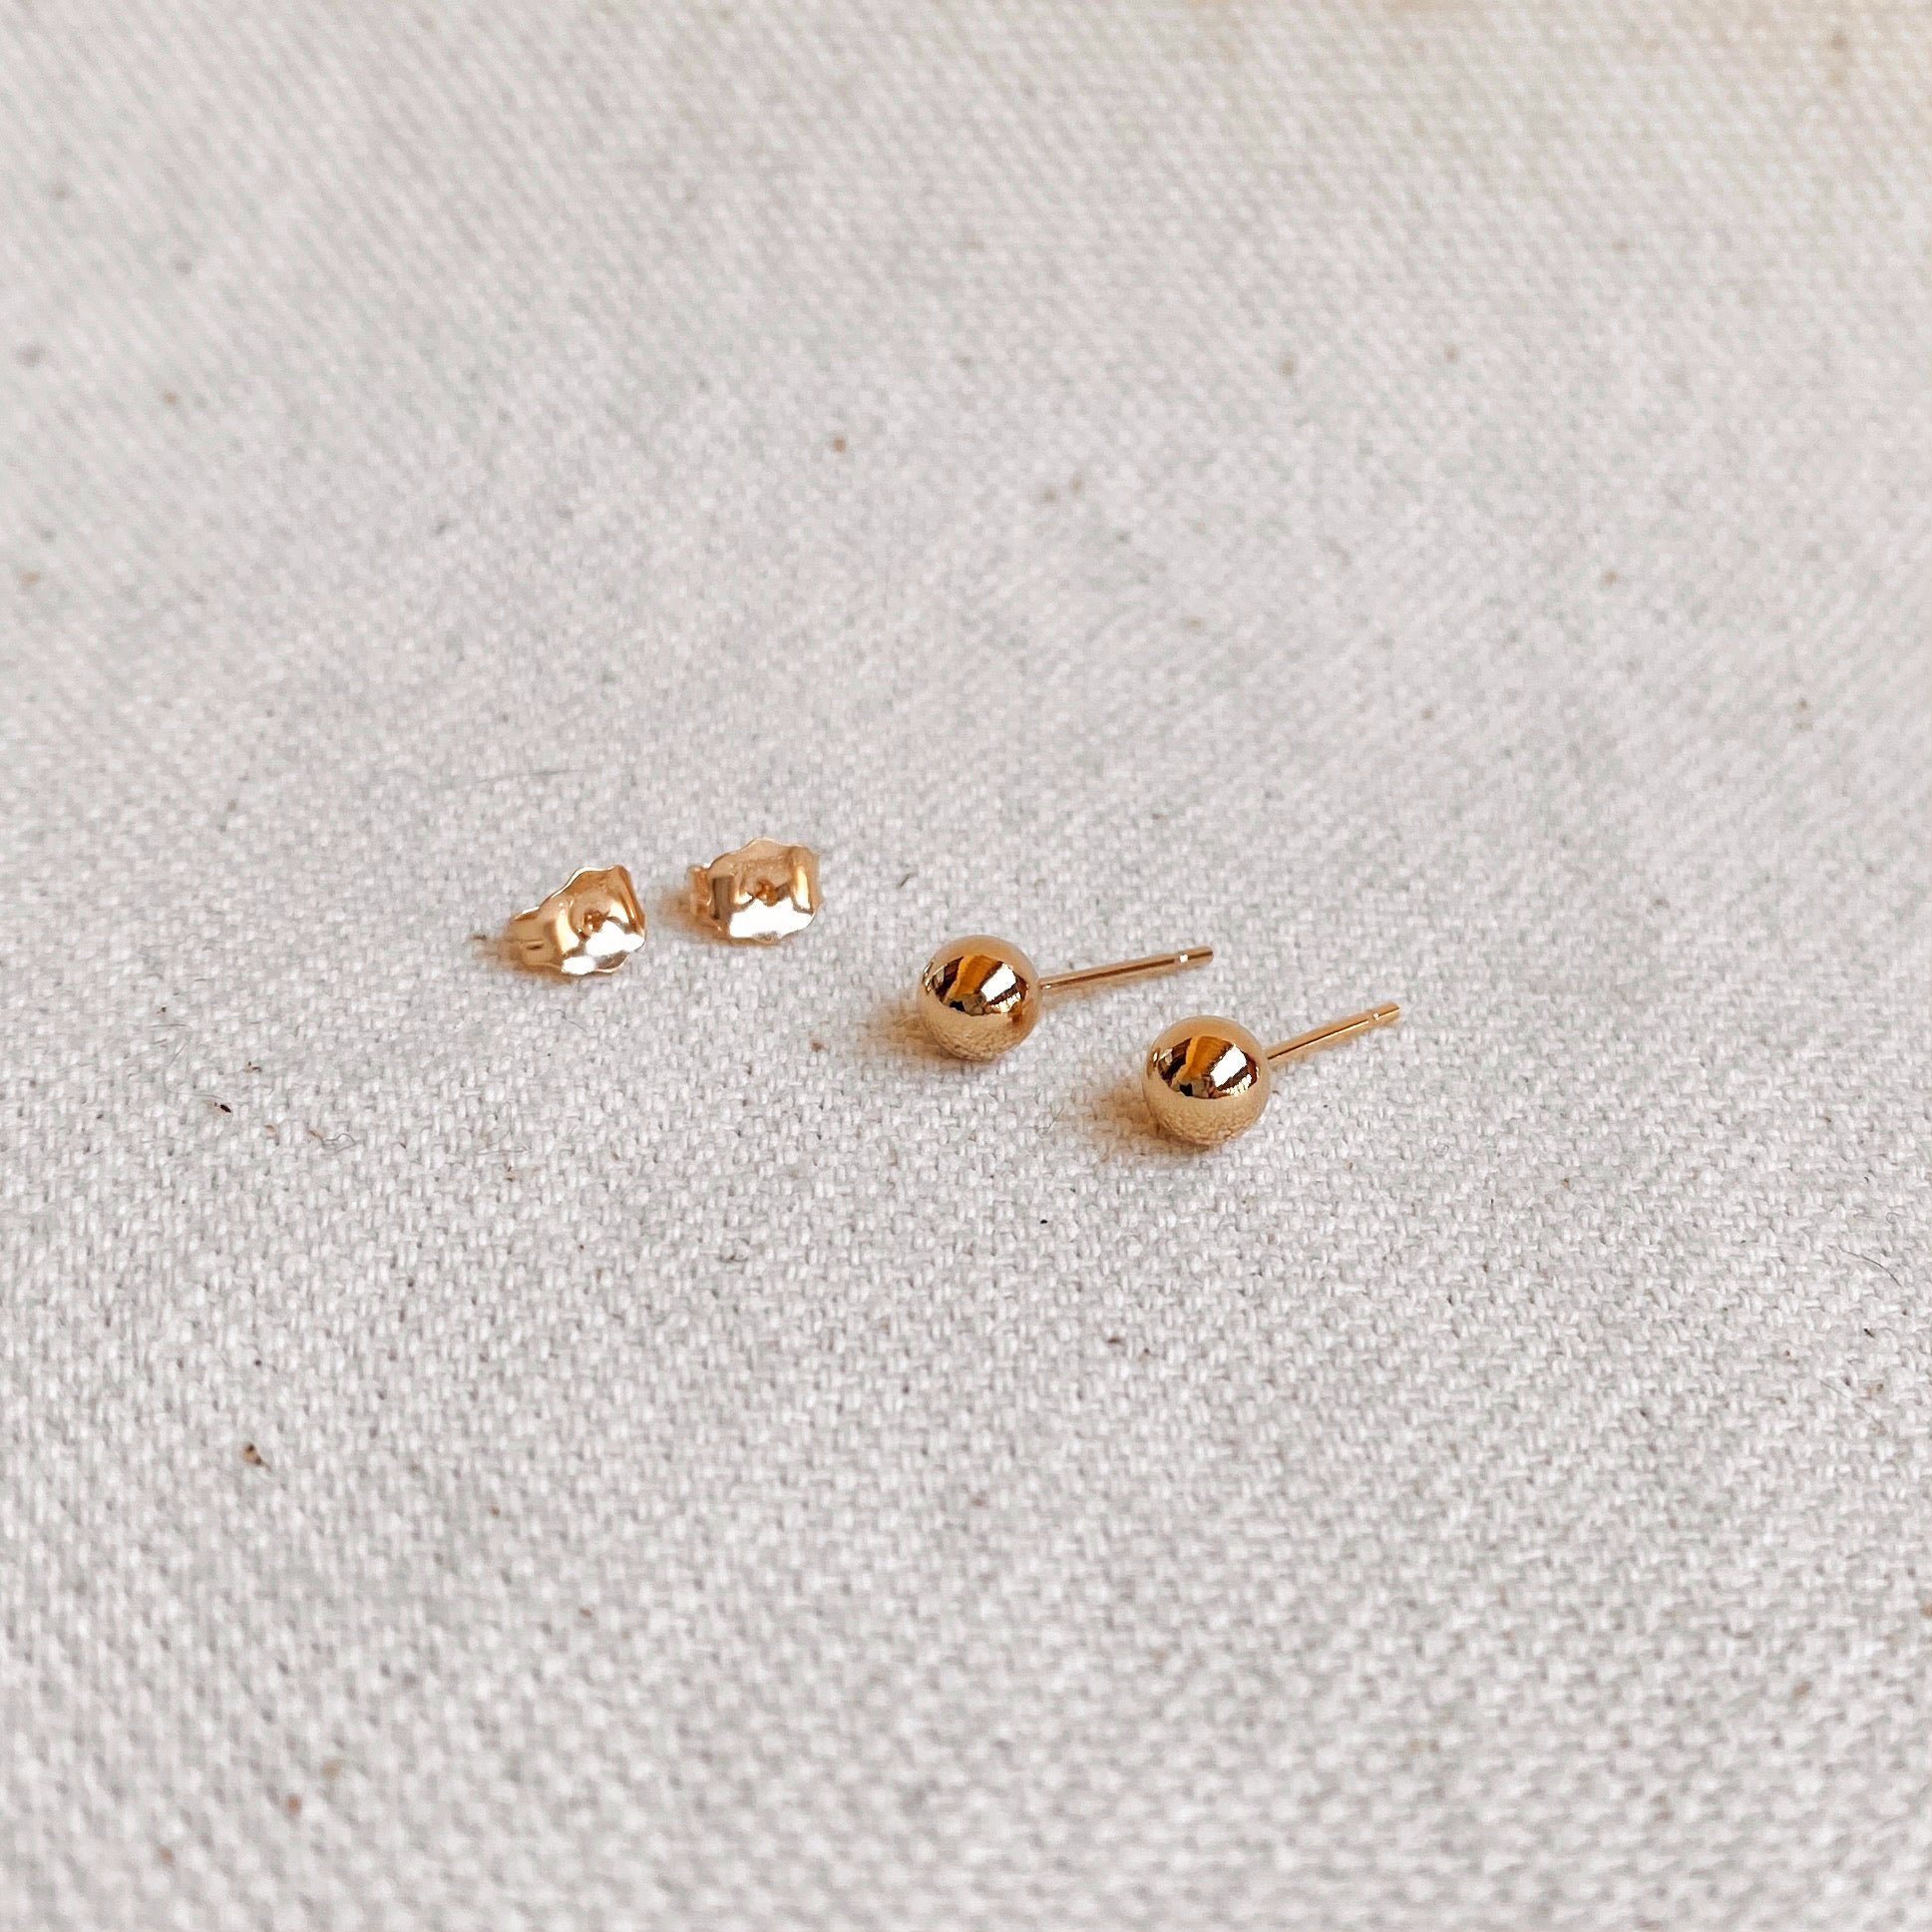 14k Gold Filled 5.0mm Ball Stud Earrings Wholesale Supplier by GoldFi